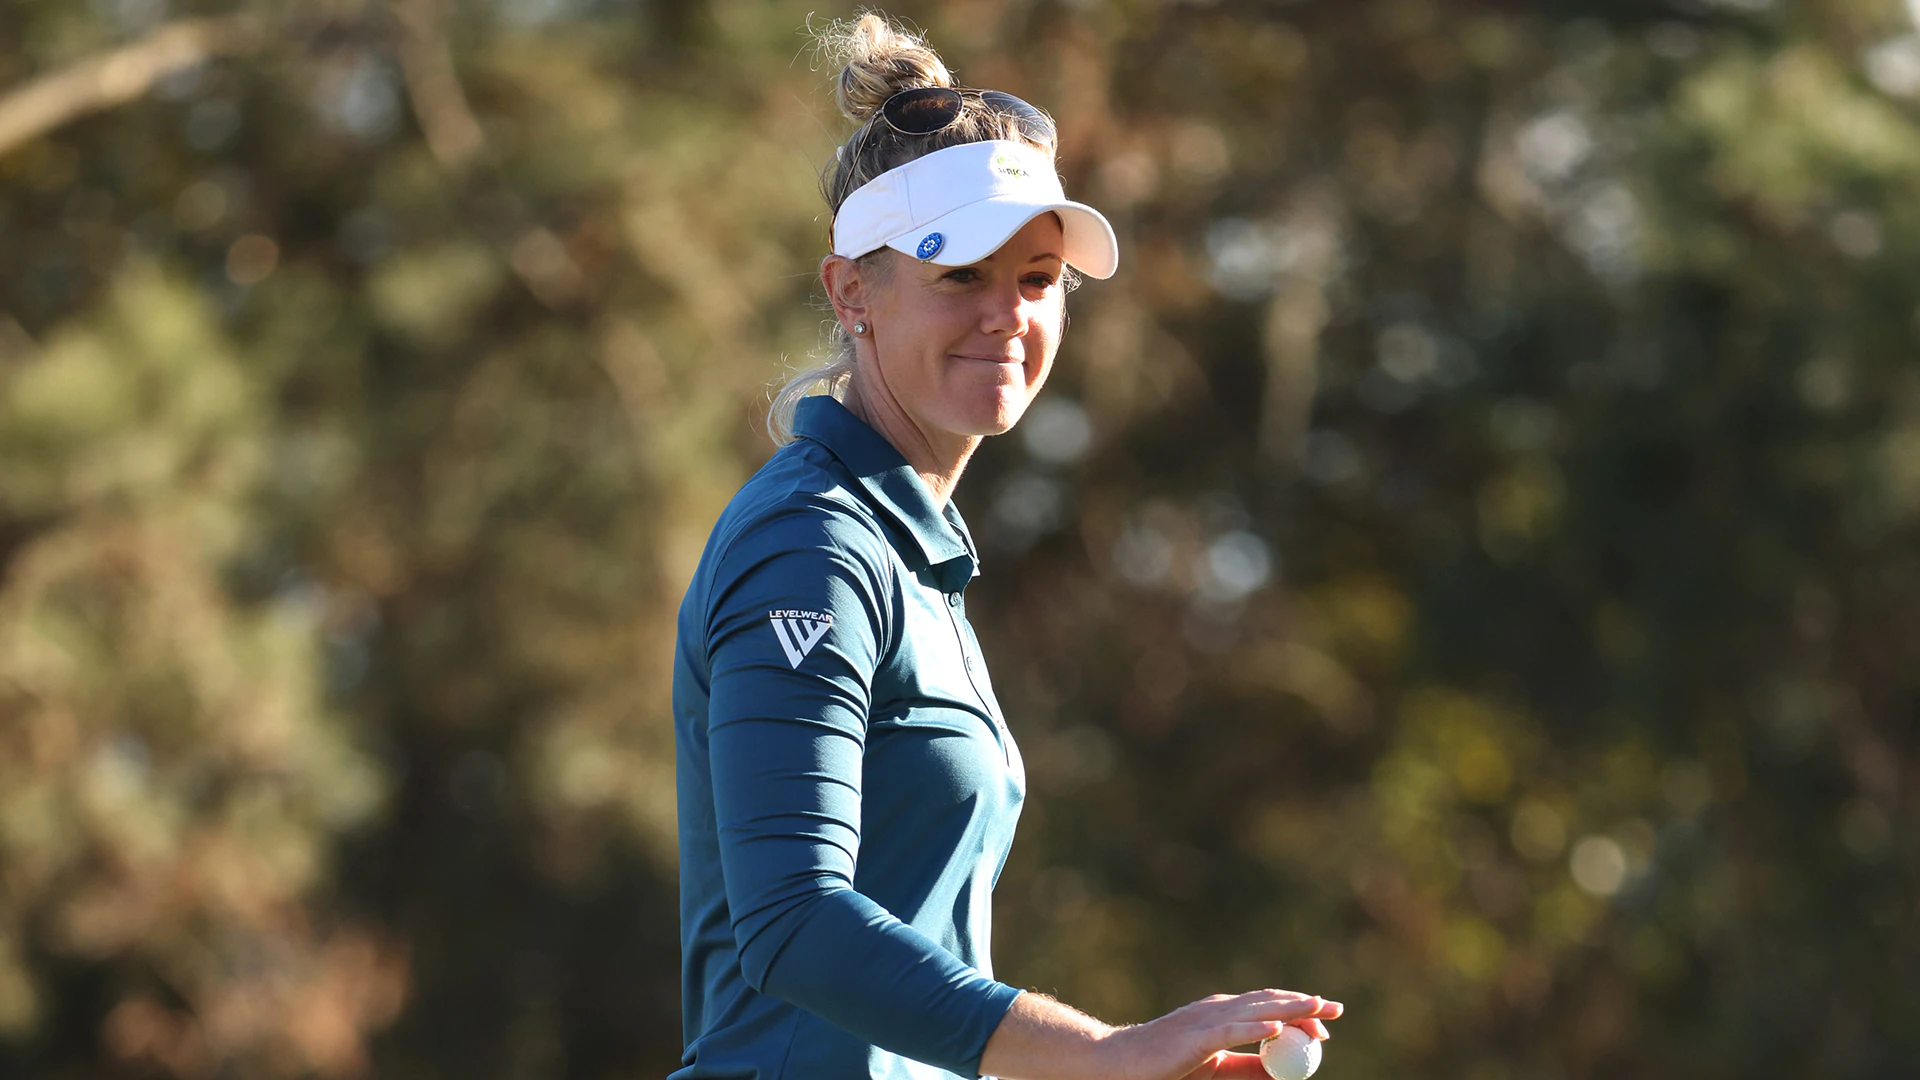 Still searching for elusive first win, Amy Olson leads U.S. Women’s Open